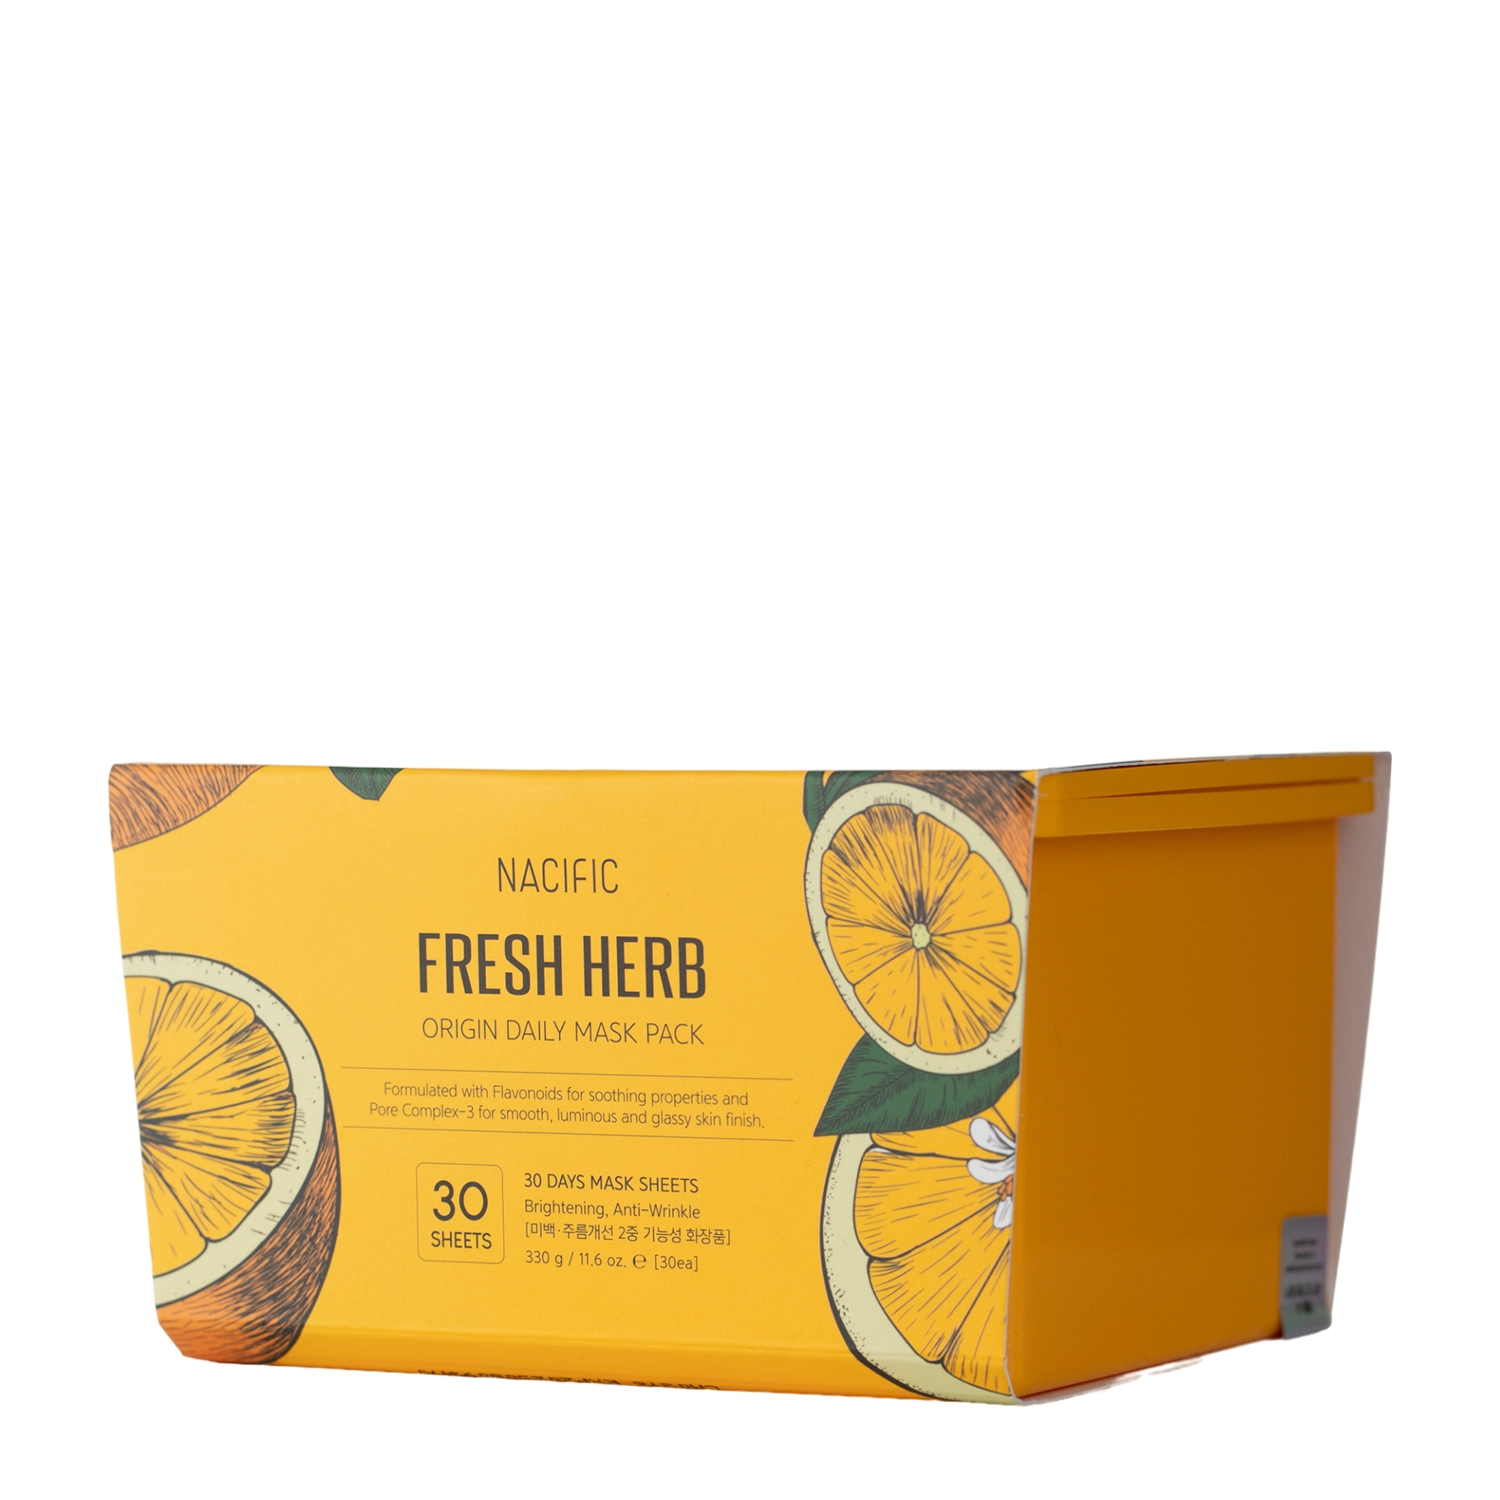 Nacific - Fresh Herb Origin Daily Mask Pack - Набор восстанавливающих тканевых масок - 30шт./330g